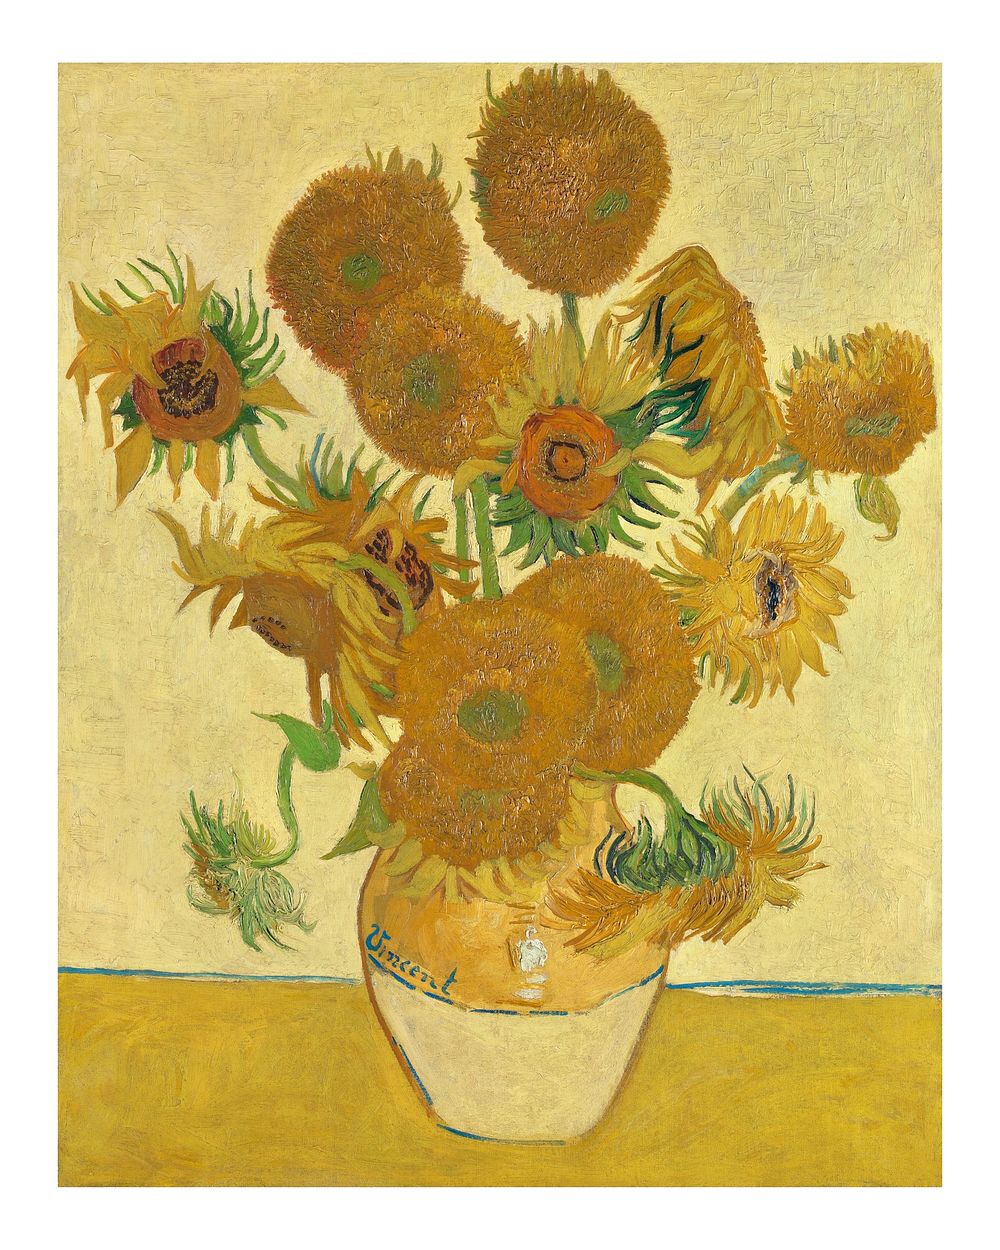 Van Gogh Sunflowers art print, famous still life painting wall art print decor.